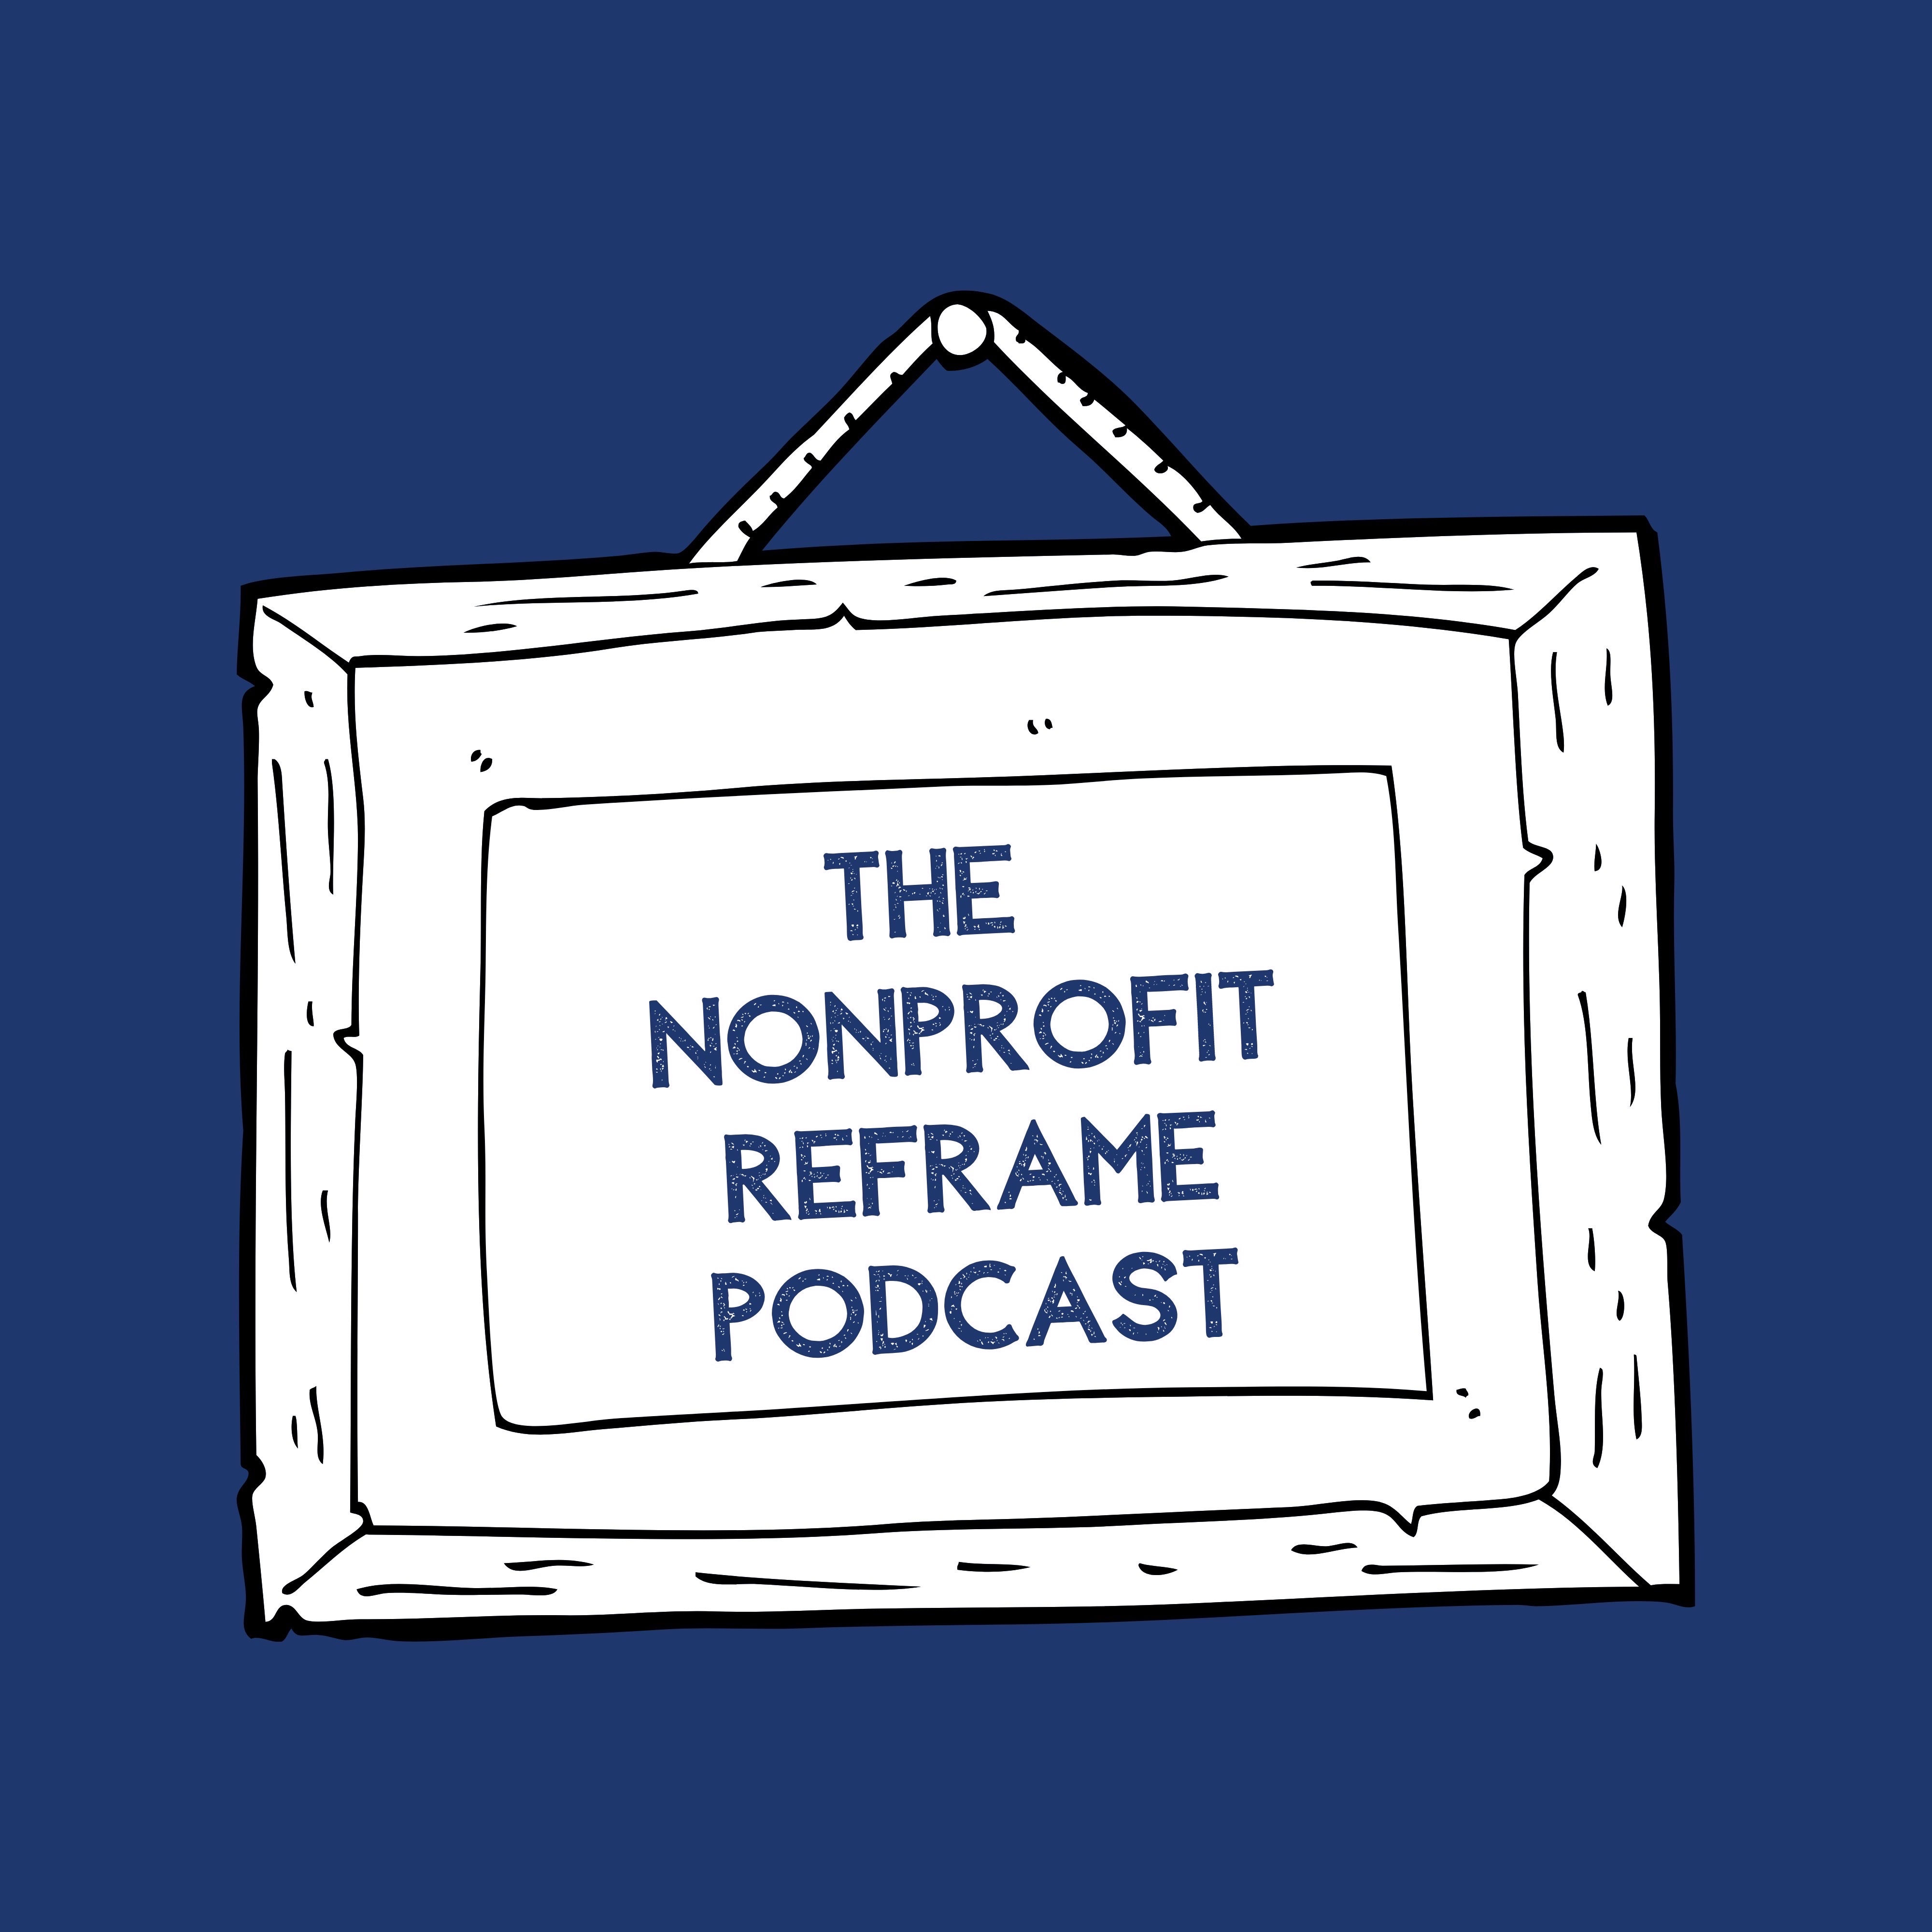 The Nonprofit Reframe